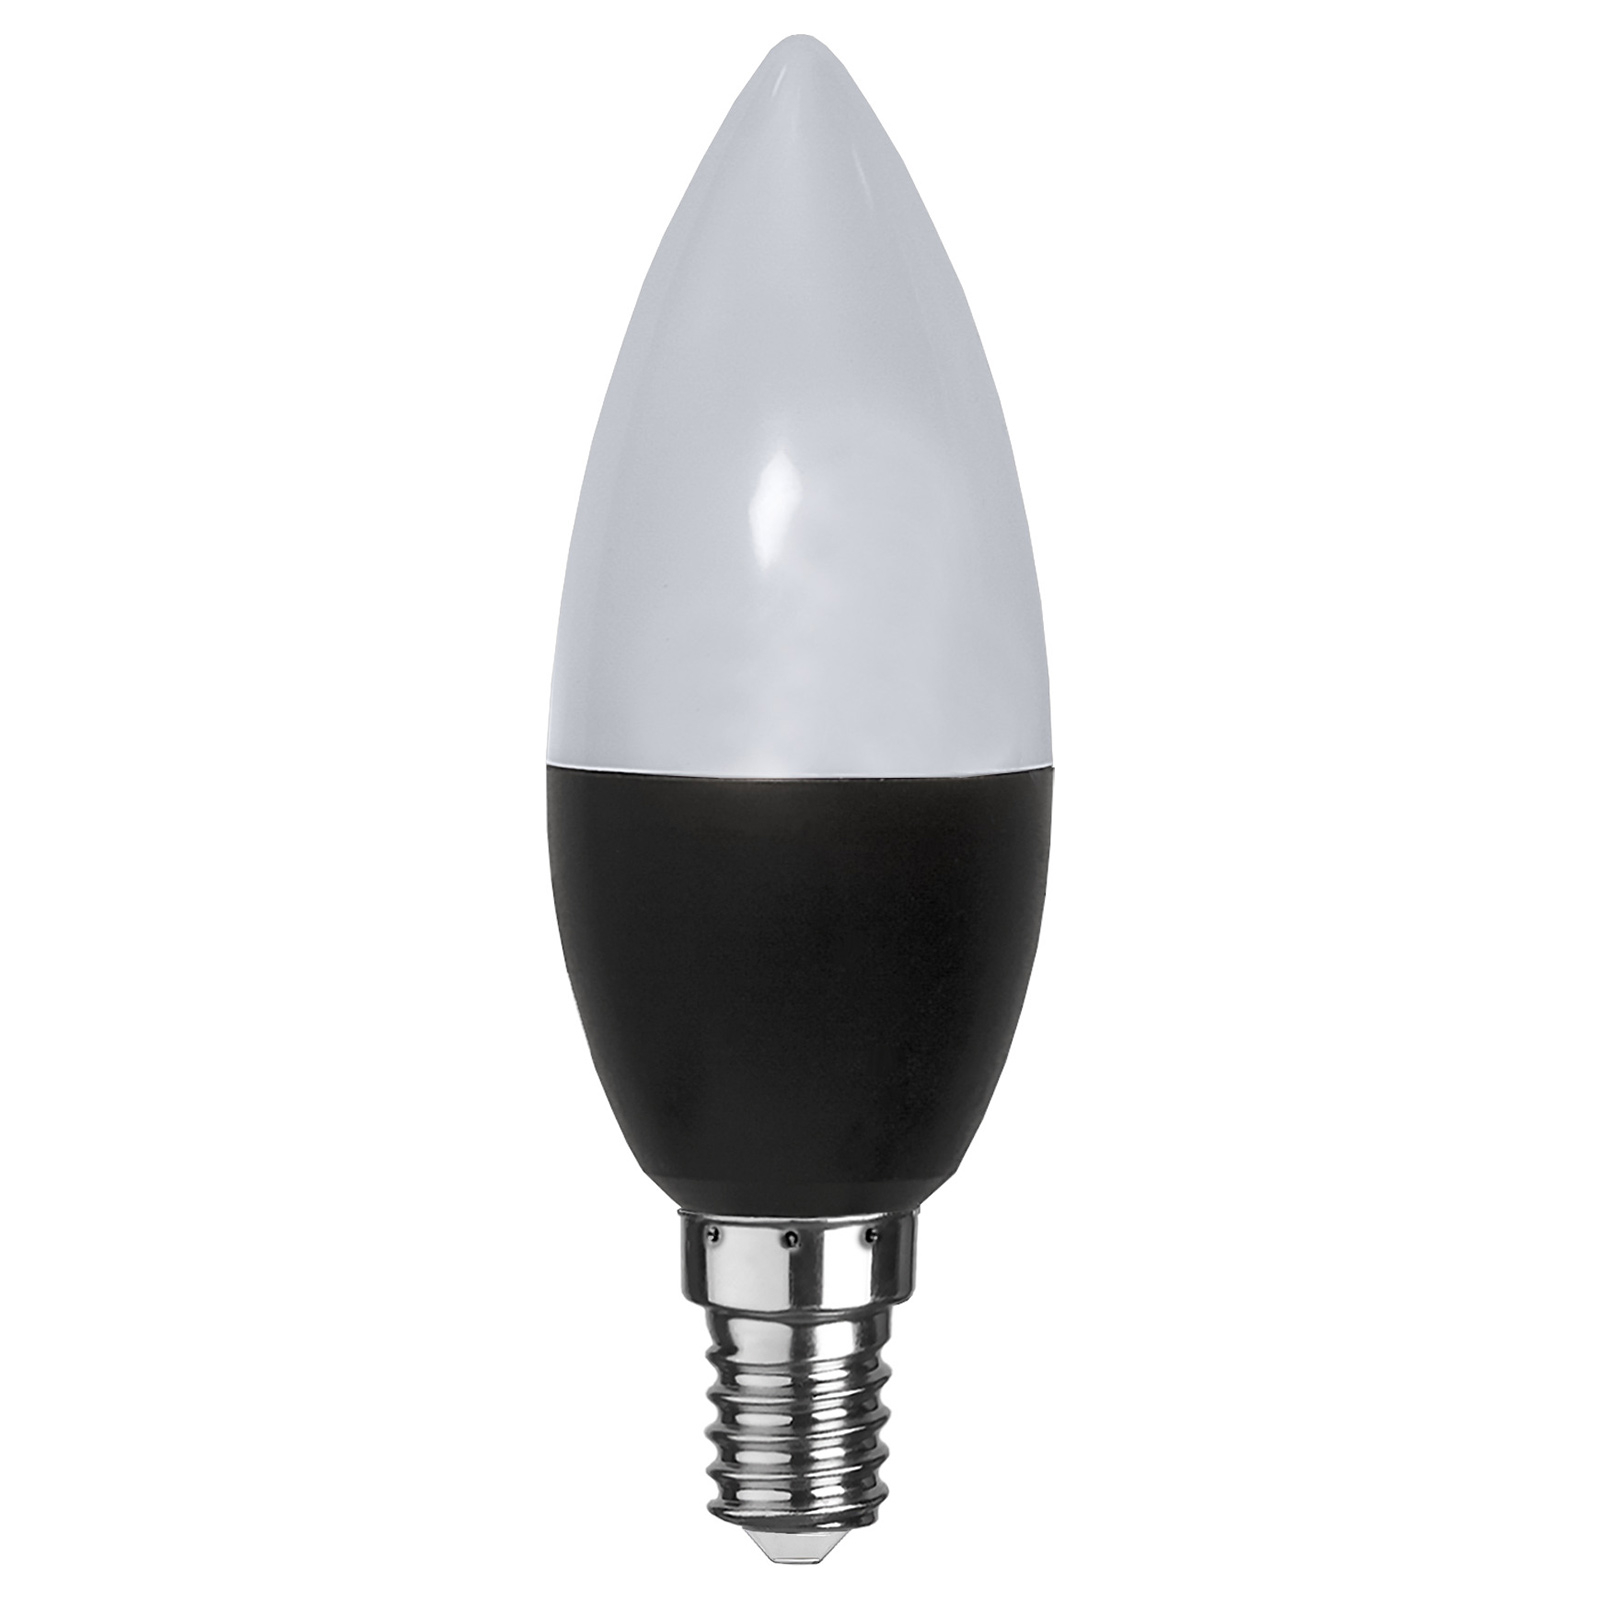 LED stearinlyslampe E14 Flammelampe 1.800K